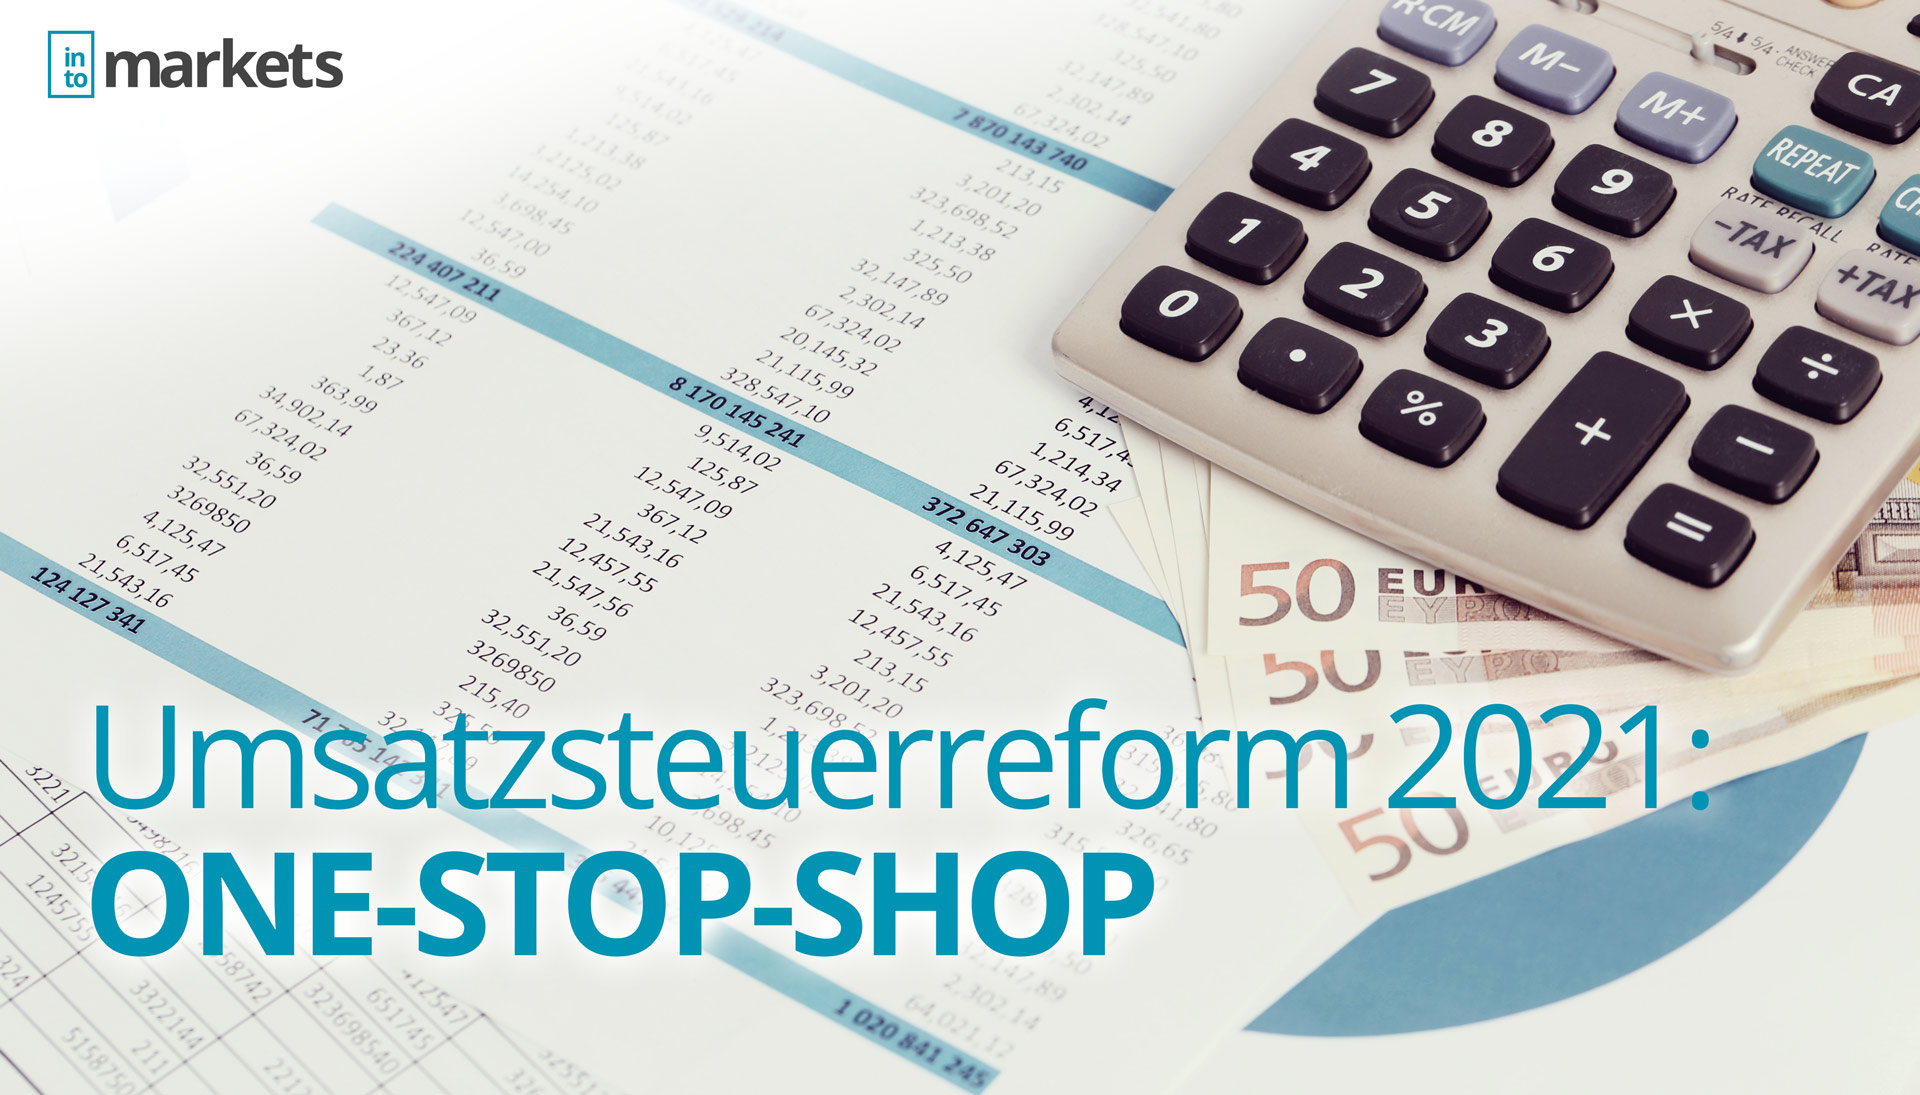 OSS One Stop Shop Umsatzsteuerreform E-Commerce